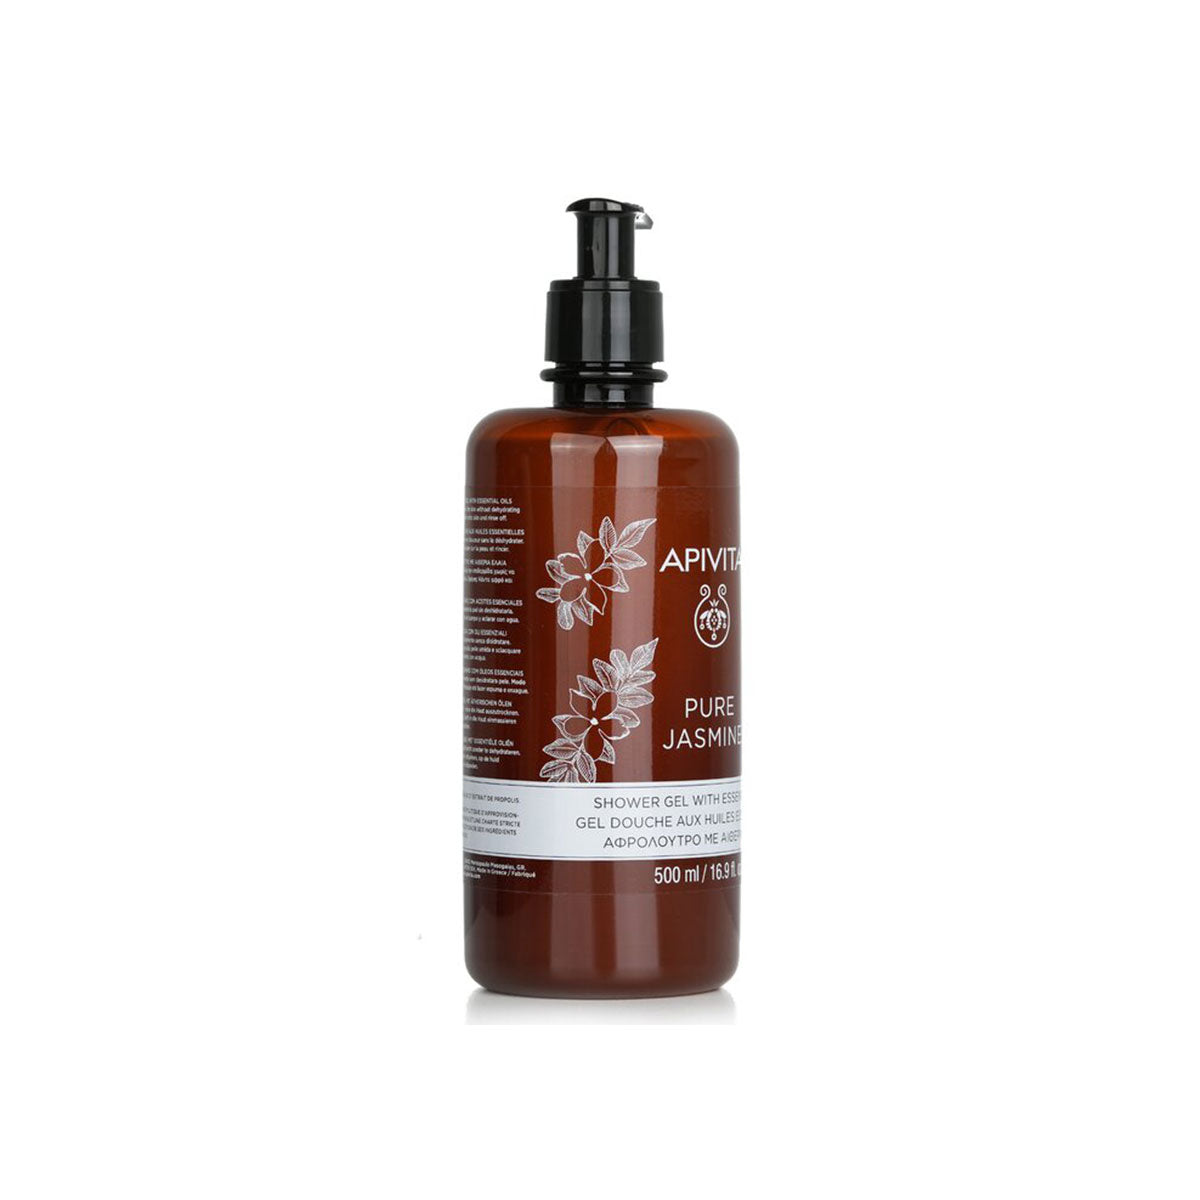 Shower Gel with Essential Oils #Pure Jasmine 500ml